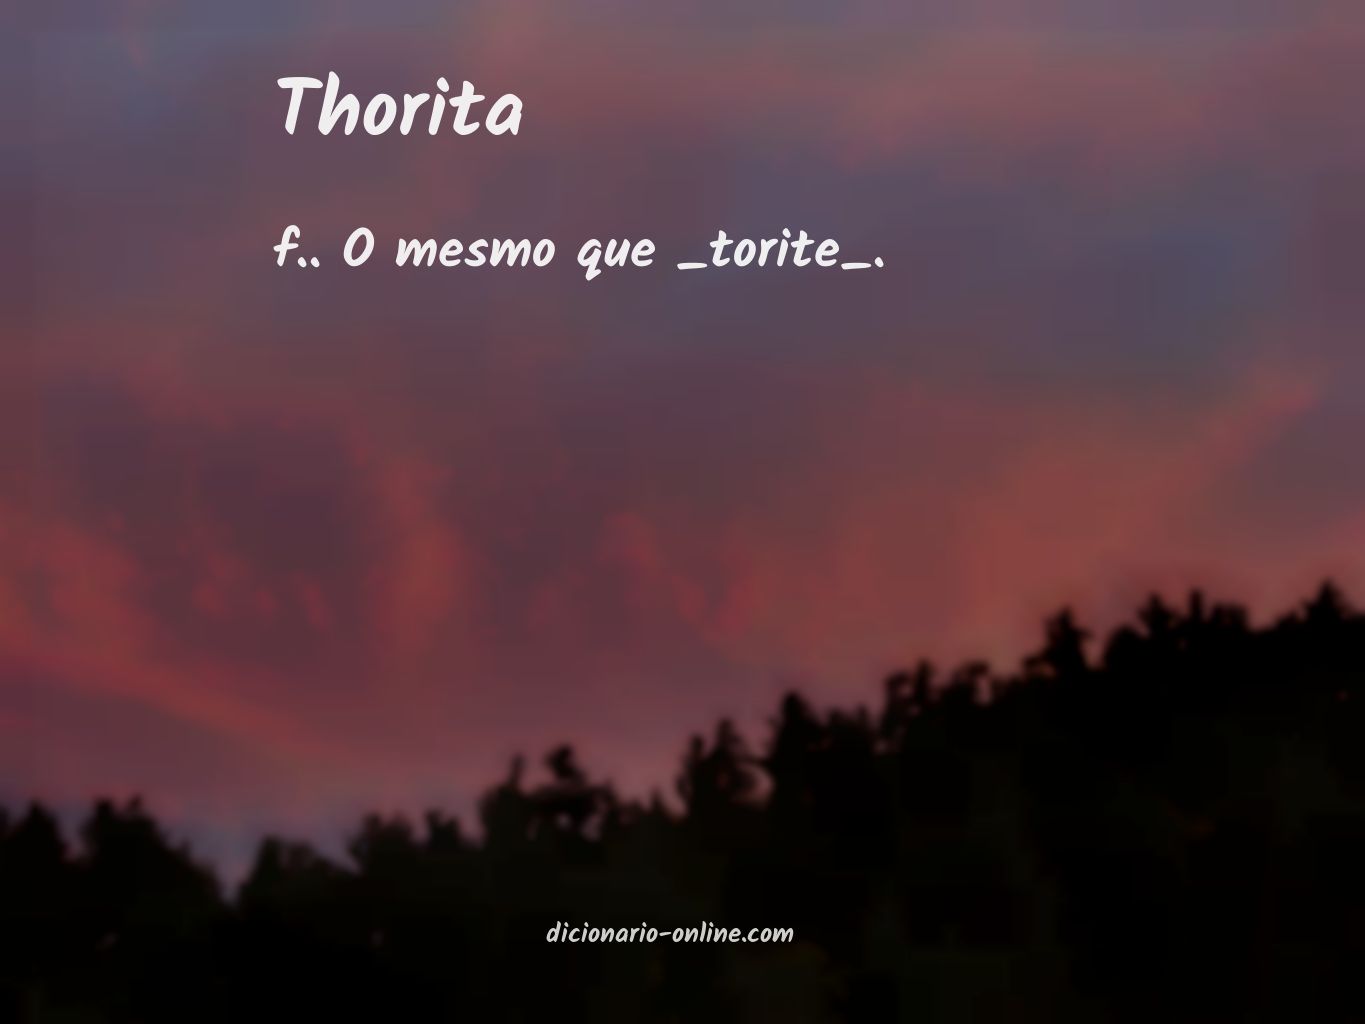 Significado de thorita